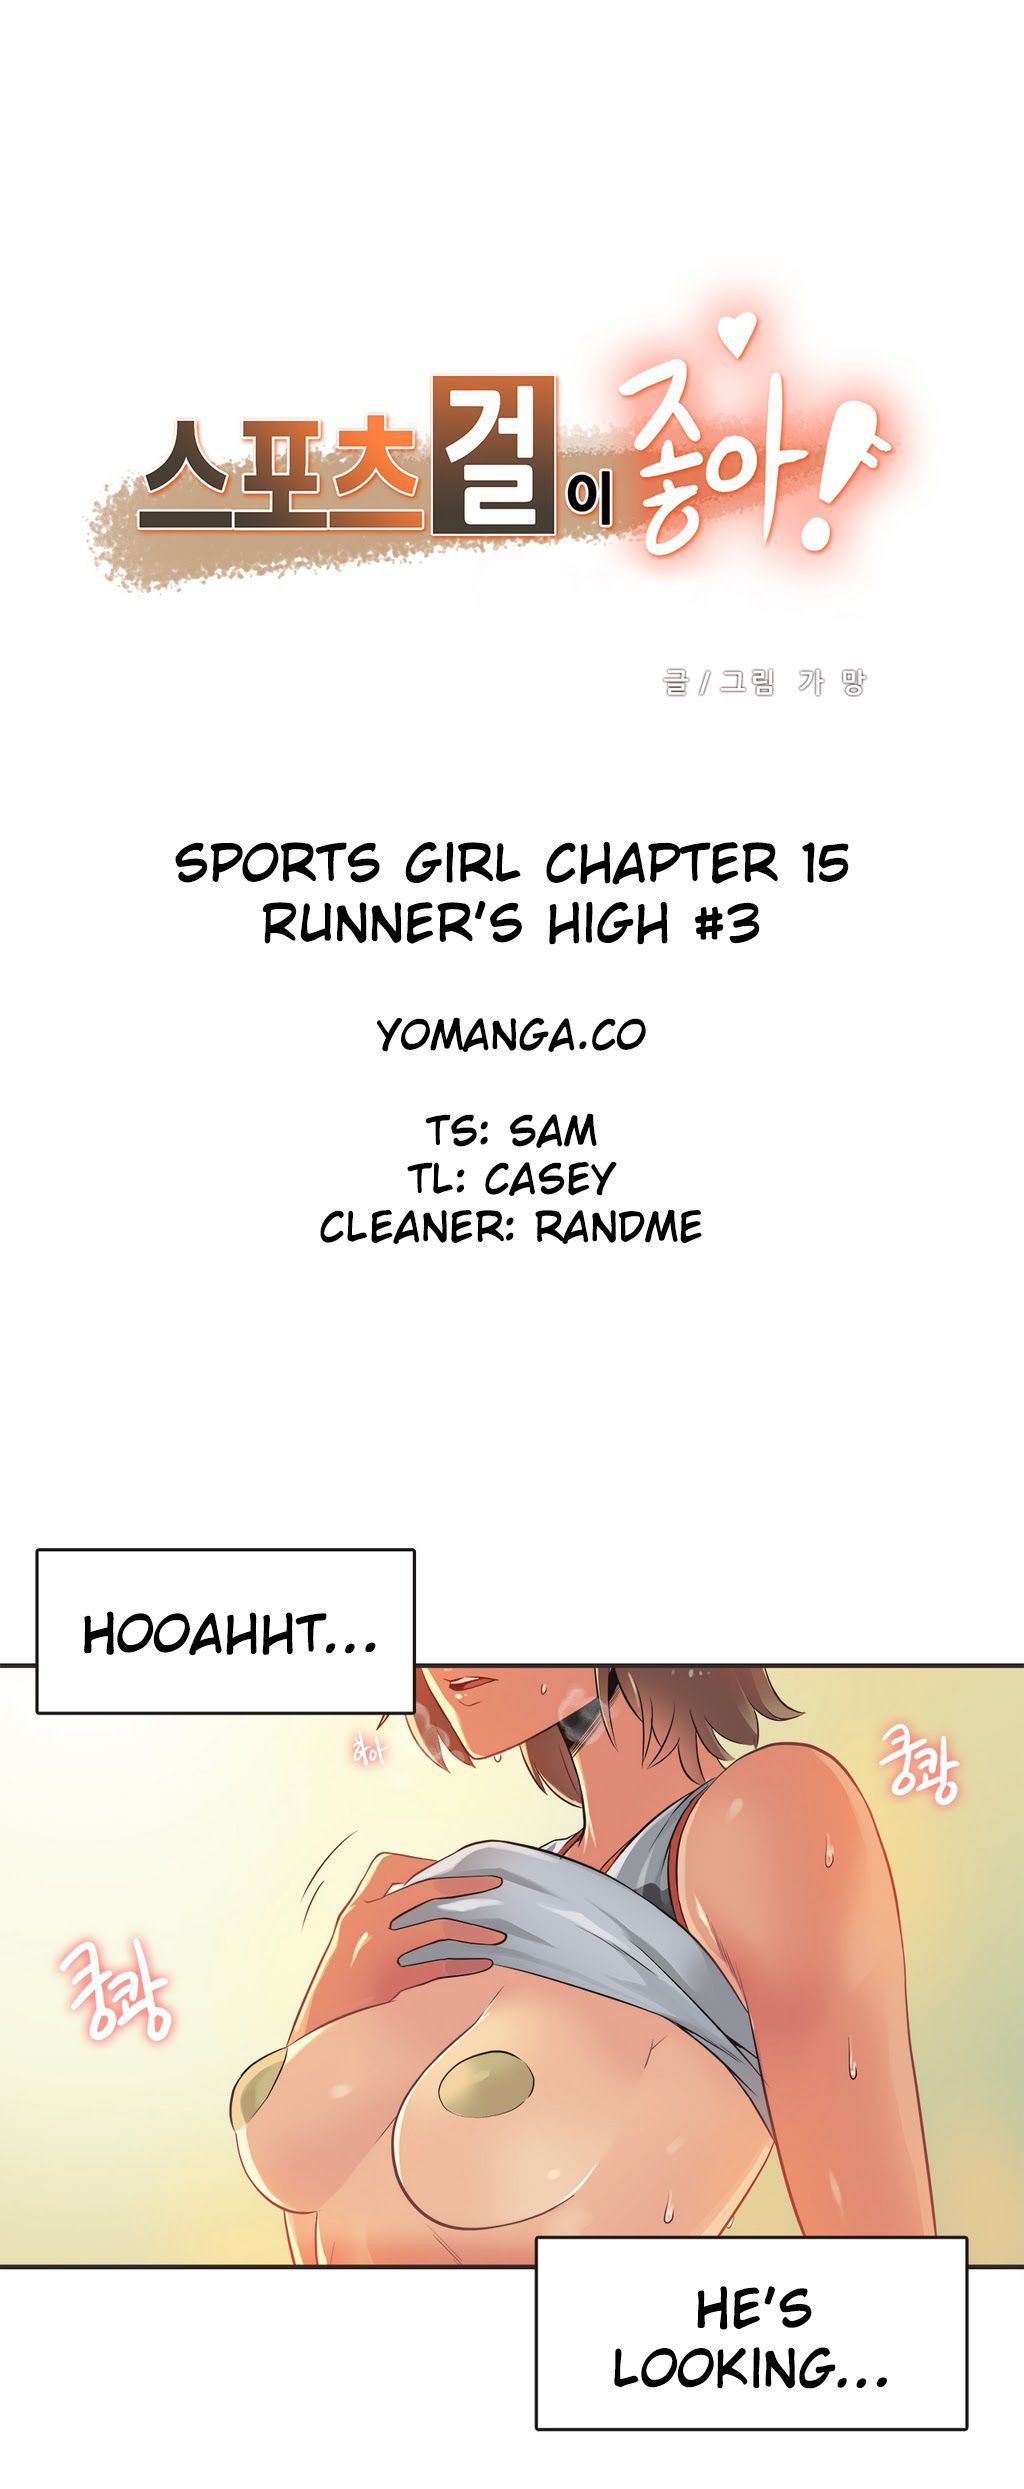 gamang スポーツ 女の子 ch.1 28 () (yomanga) 部分 13